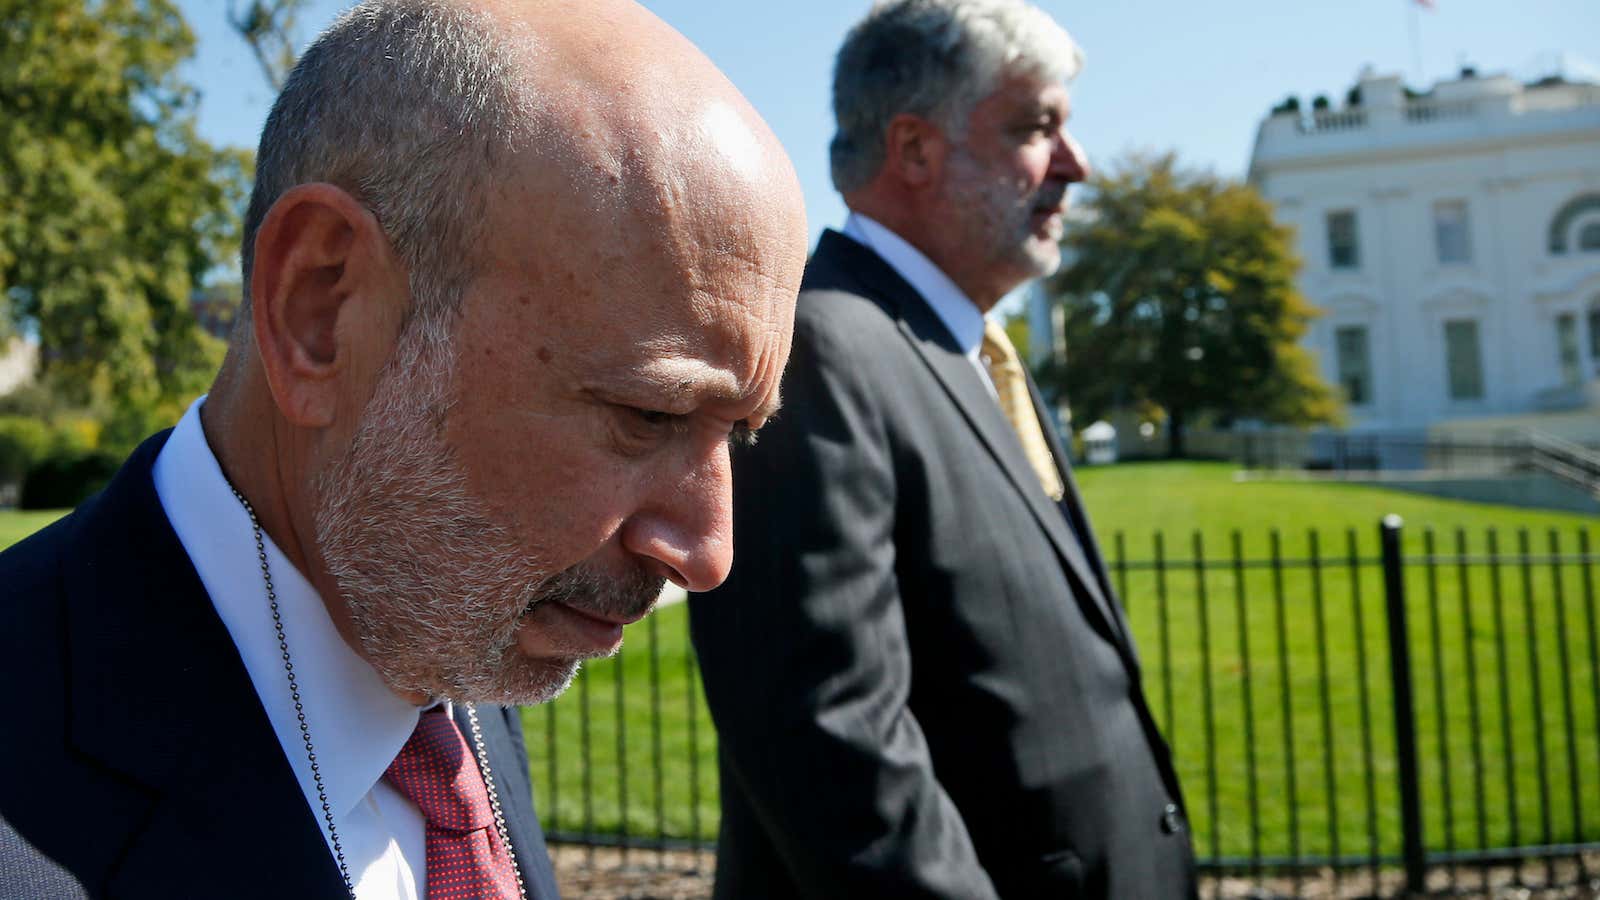 Goldman Sachs CEO Lloyd Blankfein has seen better days.